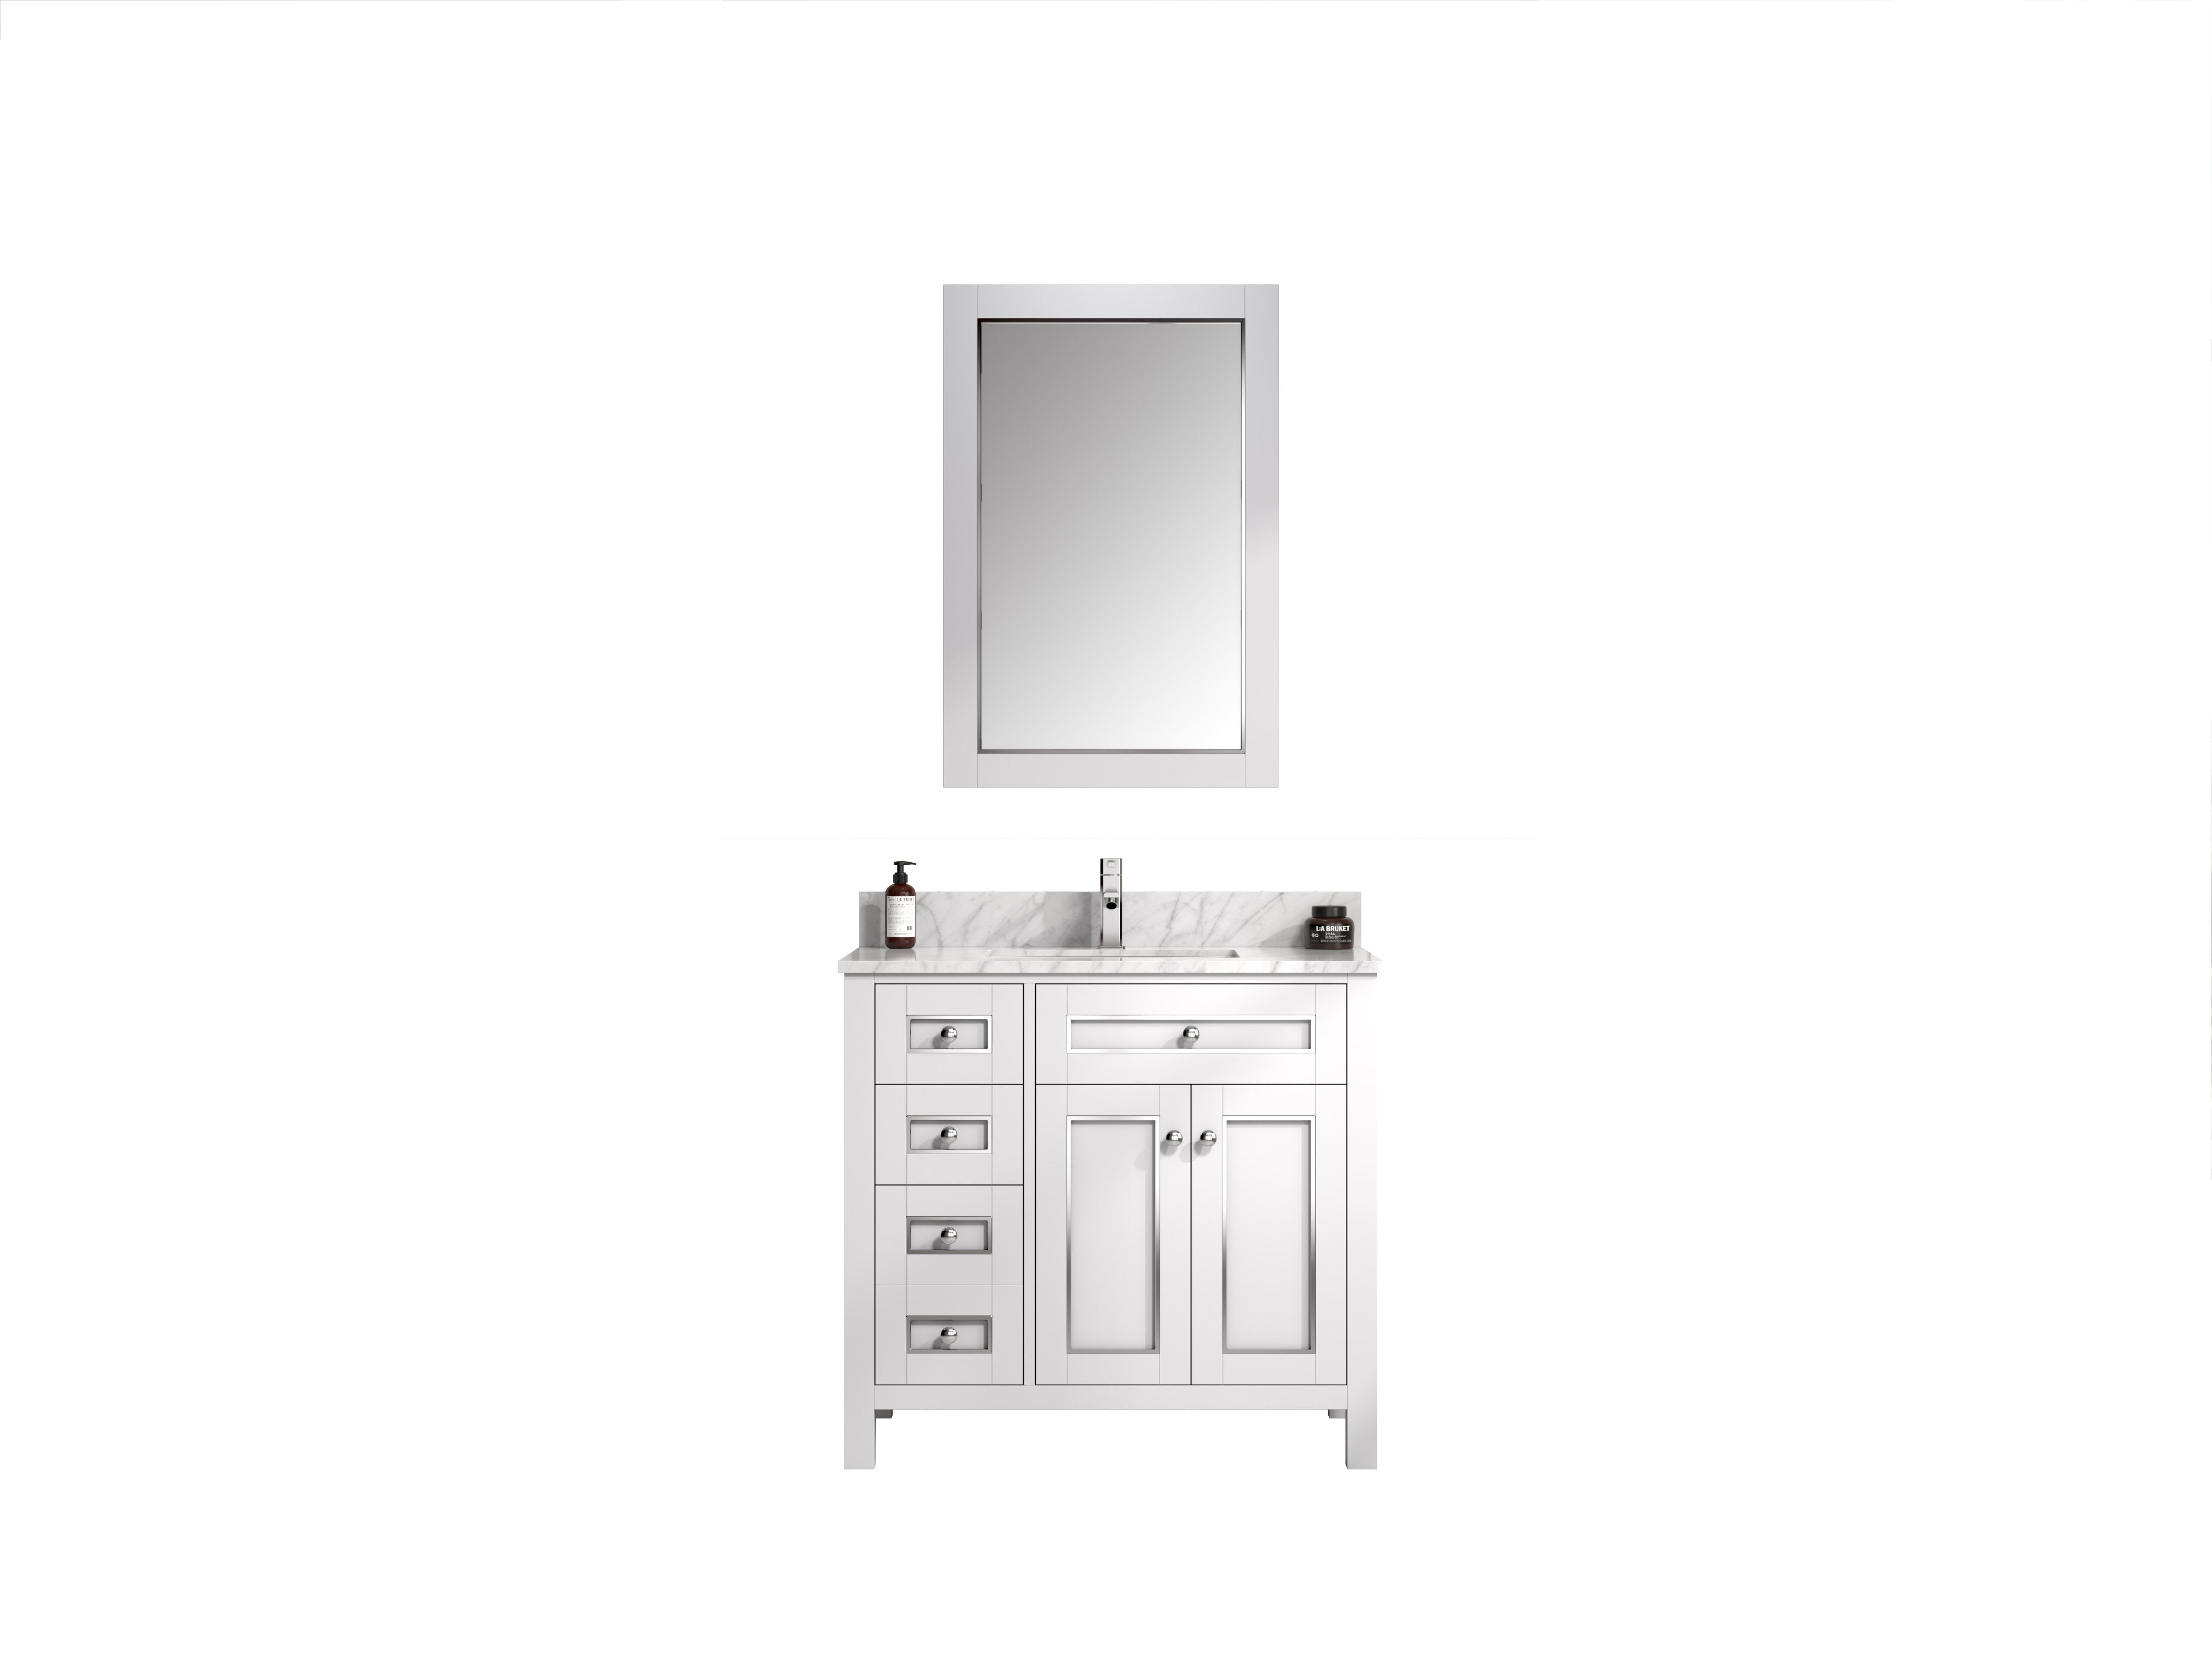 24"x36" Bathroom Mirror - East Shore Modern Home Furnishings